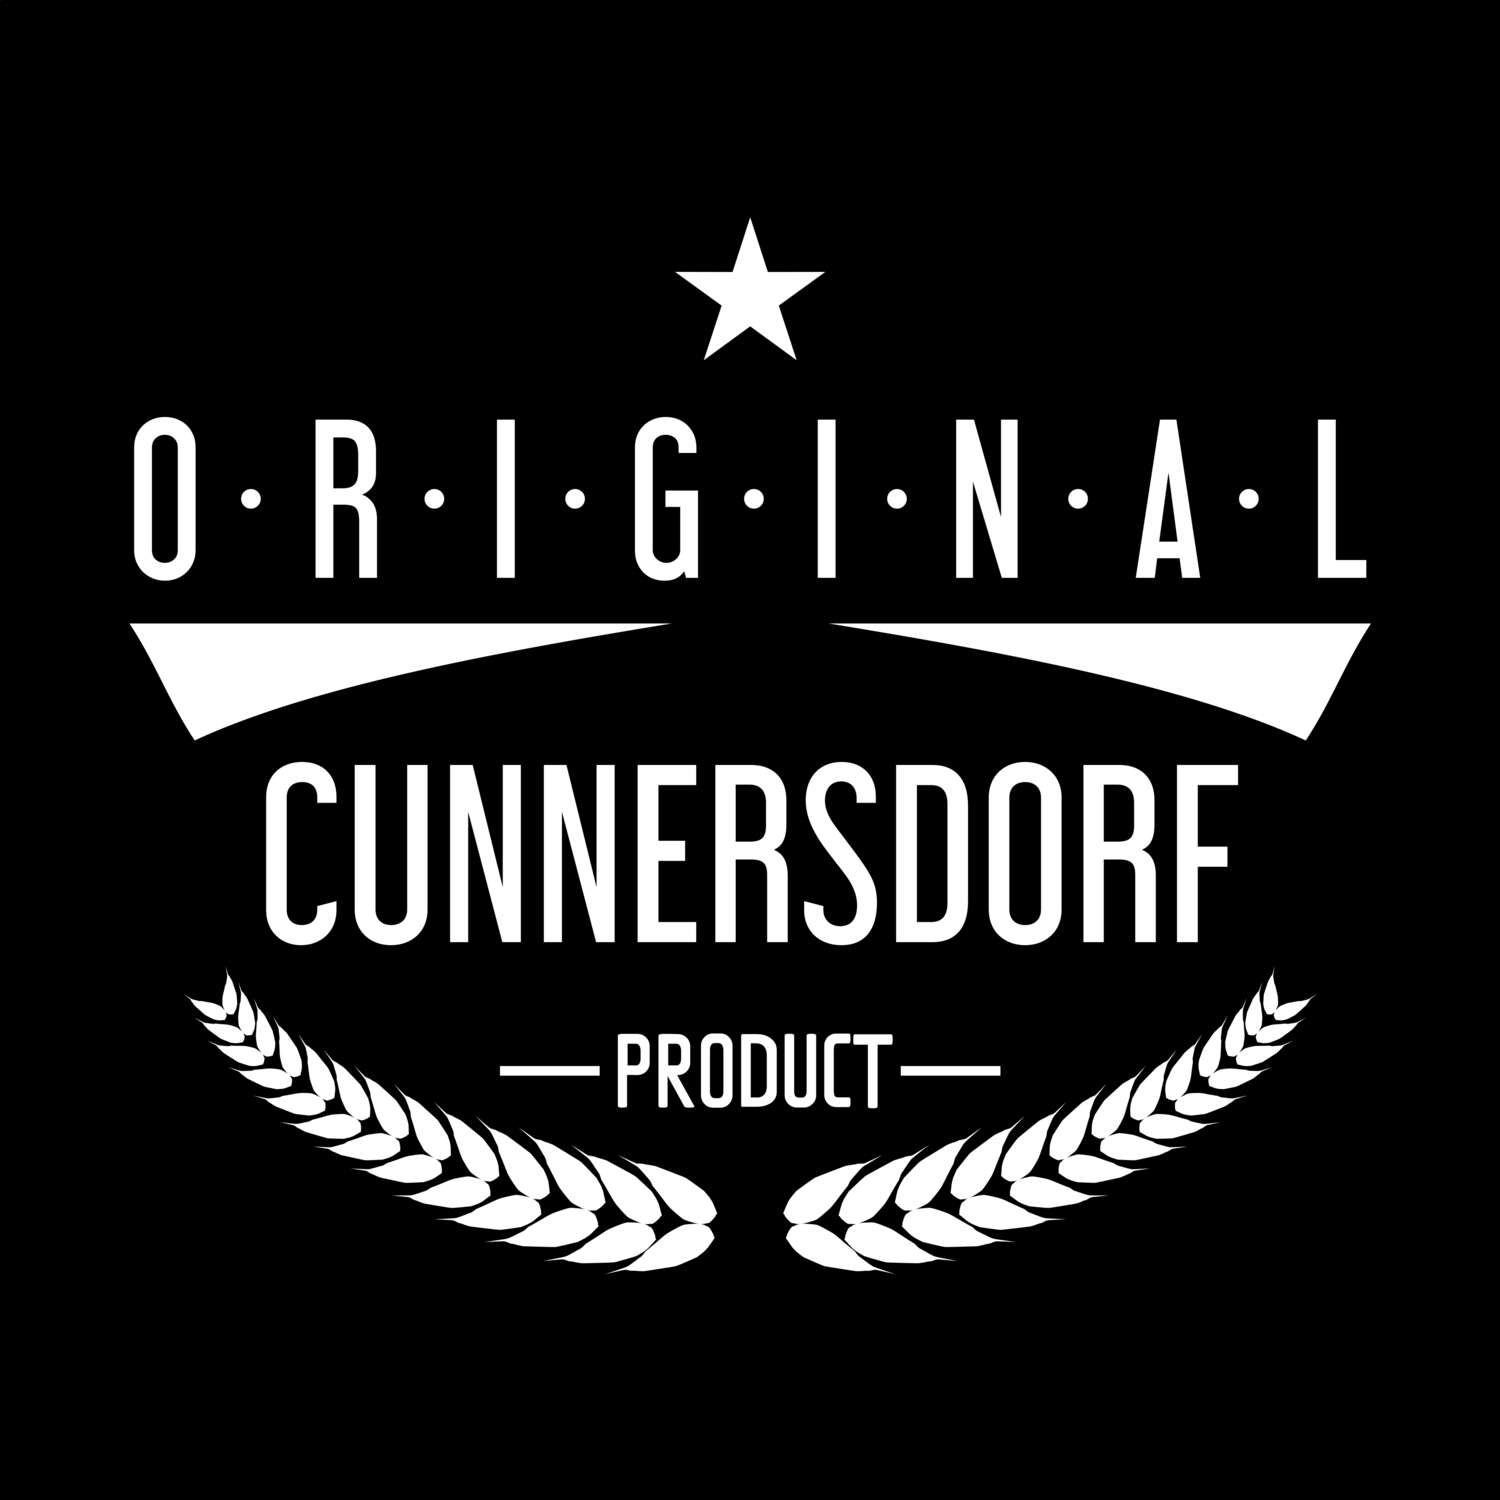 Cunnersdorf T-Shirt »Original Product«